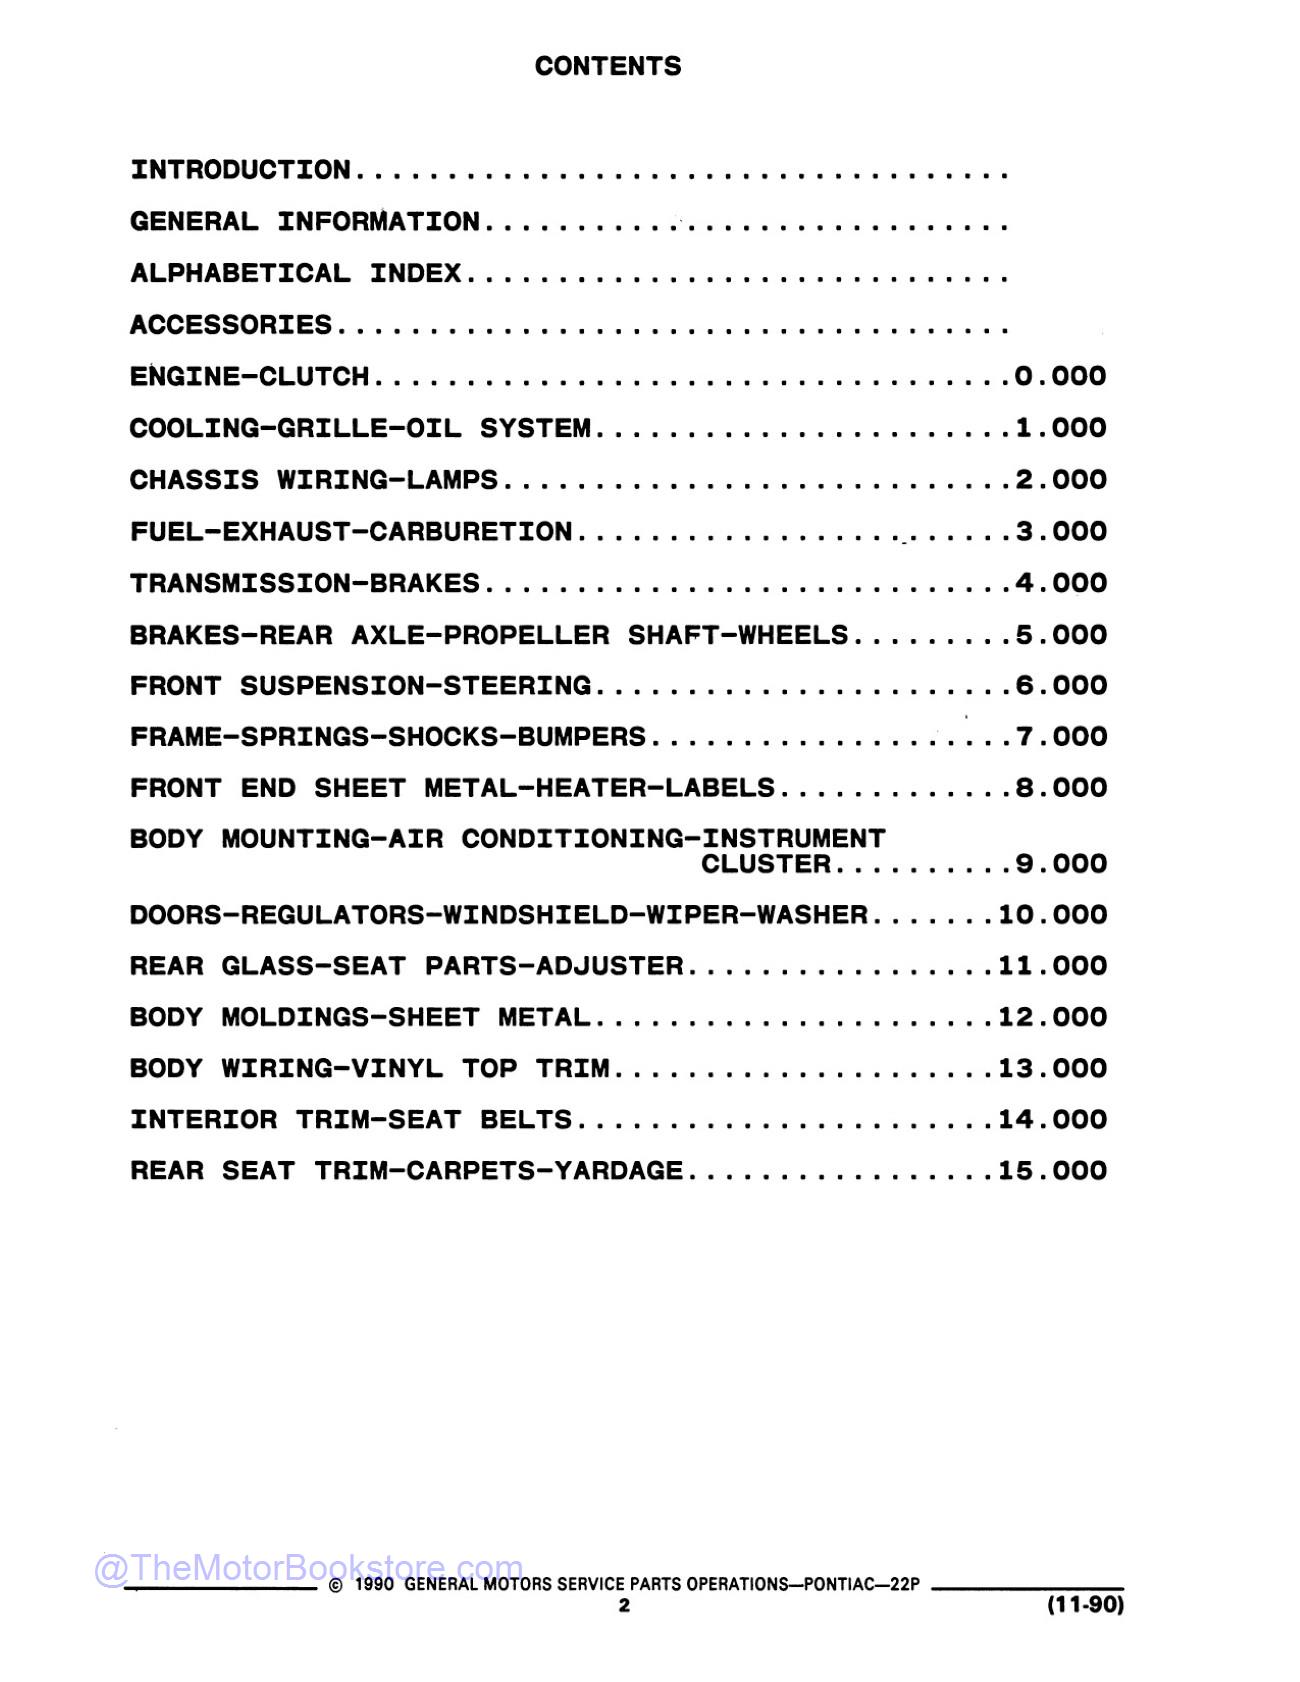 1984 - 1988 Pontiac Fiero Parts & Illustrations Catalog  - Table of Contents